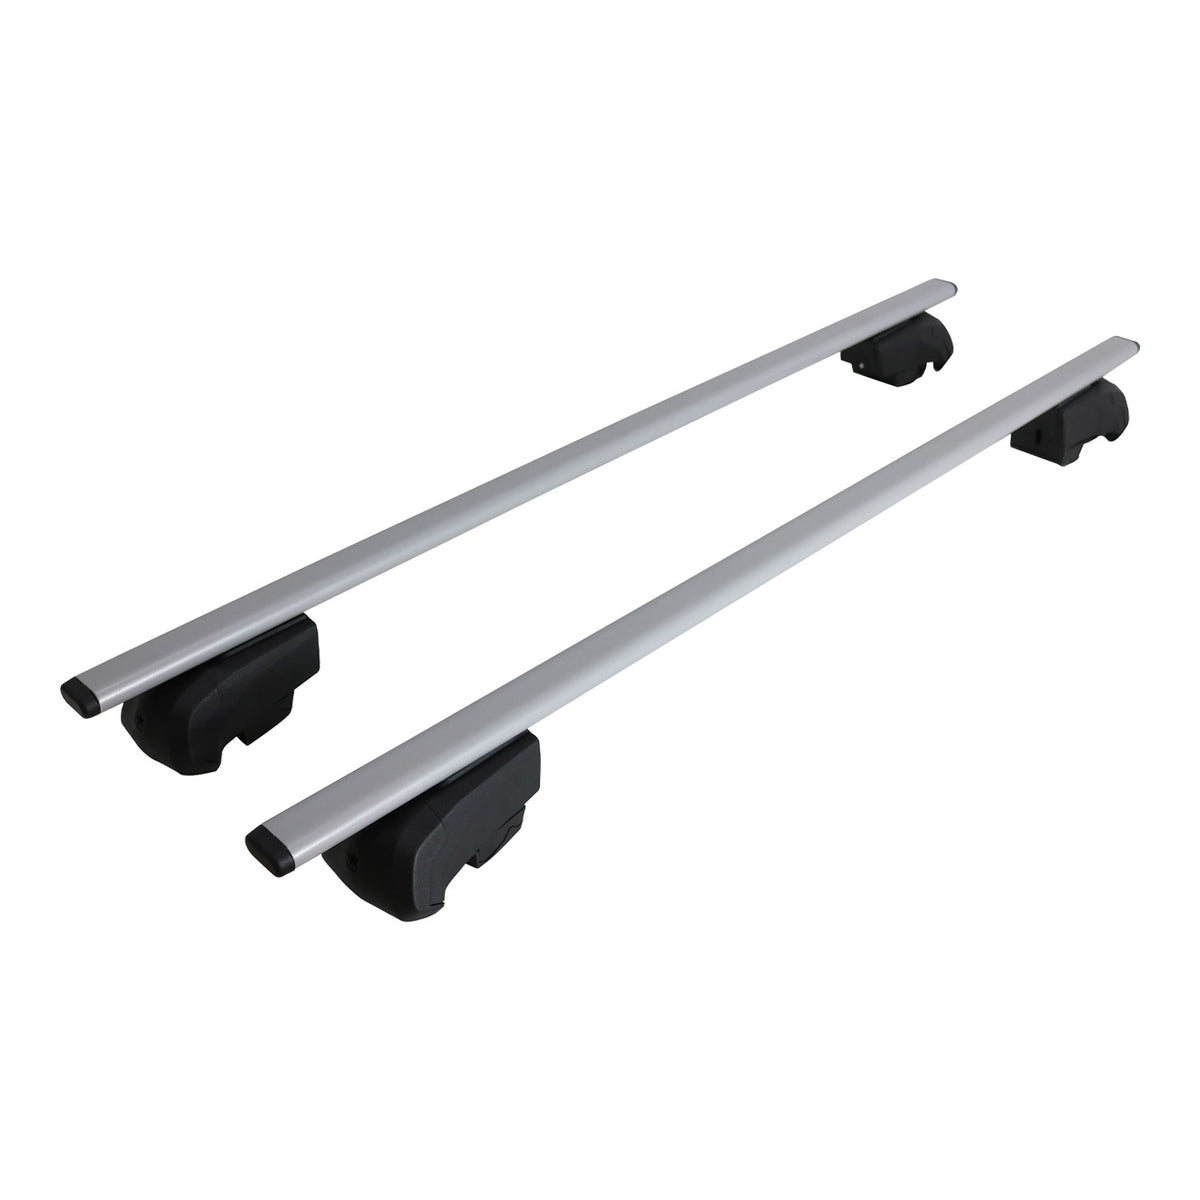 Roof rack luggage rack for Audi Q3 2011-2018 cross bars TÜV ABE aluminum silver 2x